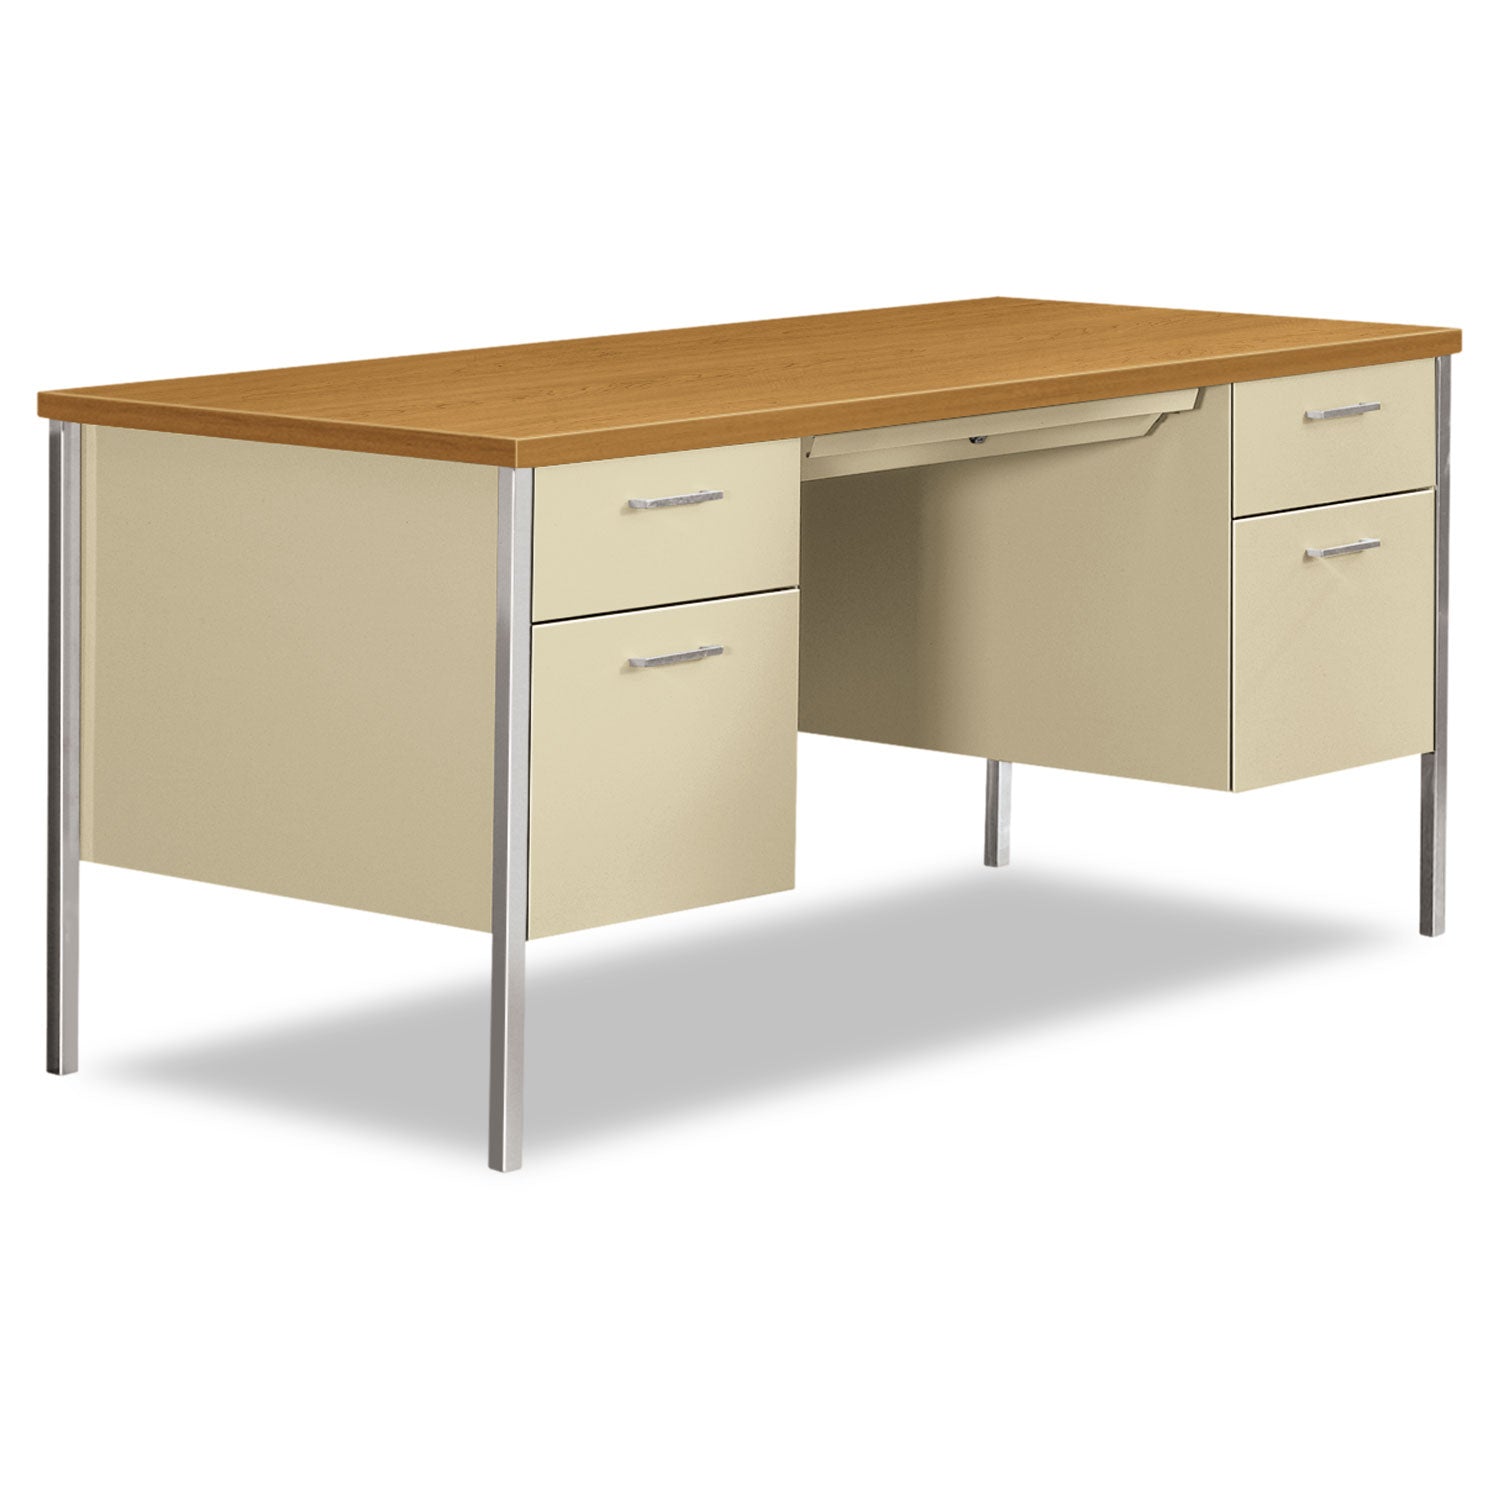 34000 Series Double Pedestal Desk, 60" x 30" x 29.5", Harvest/Putty - 